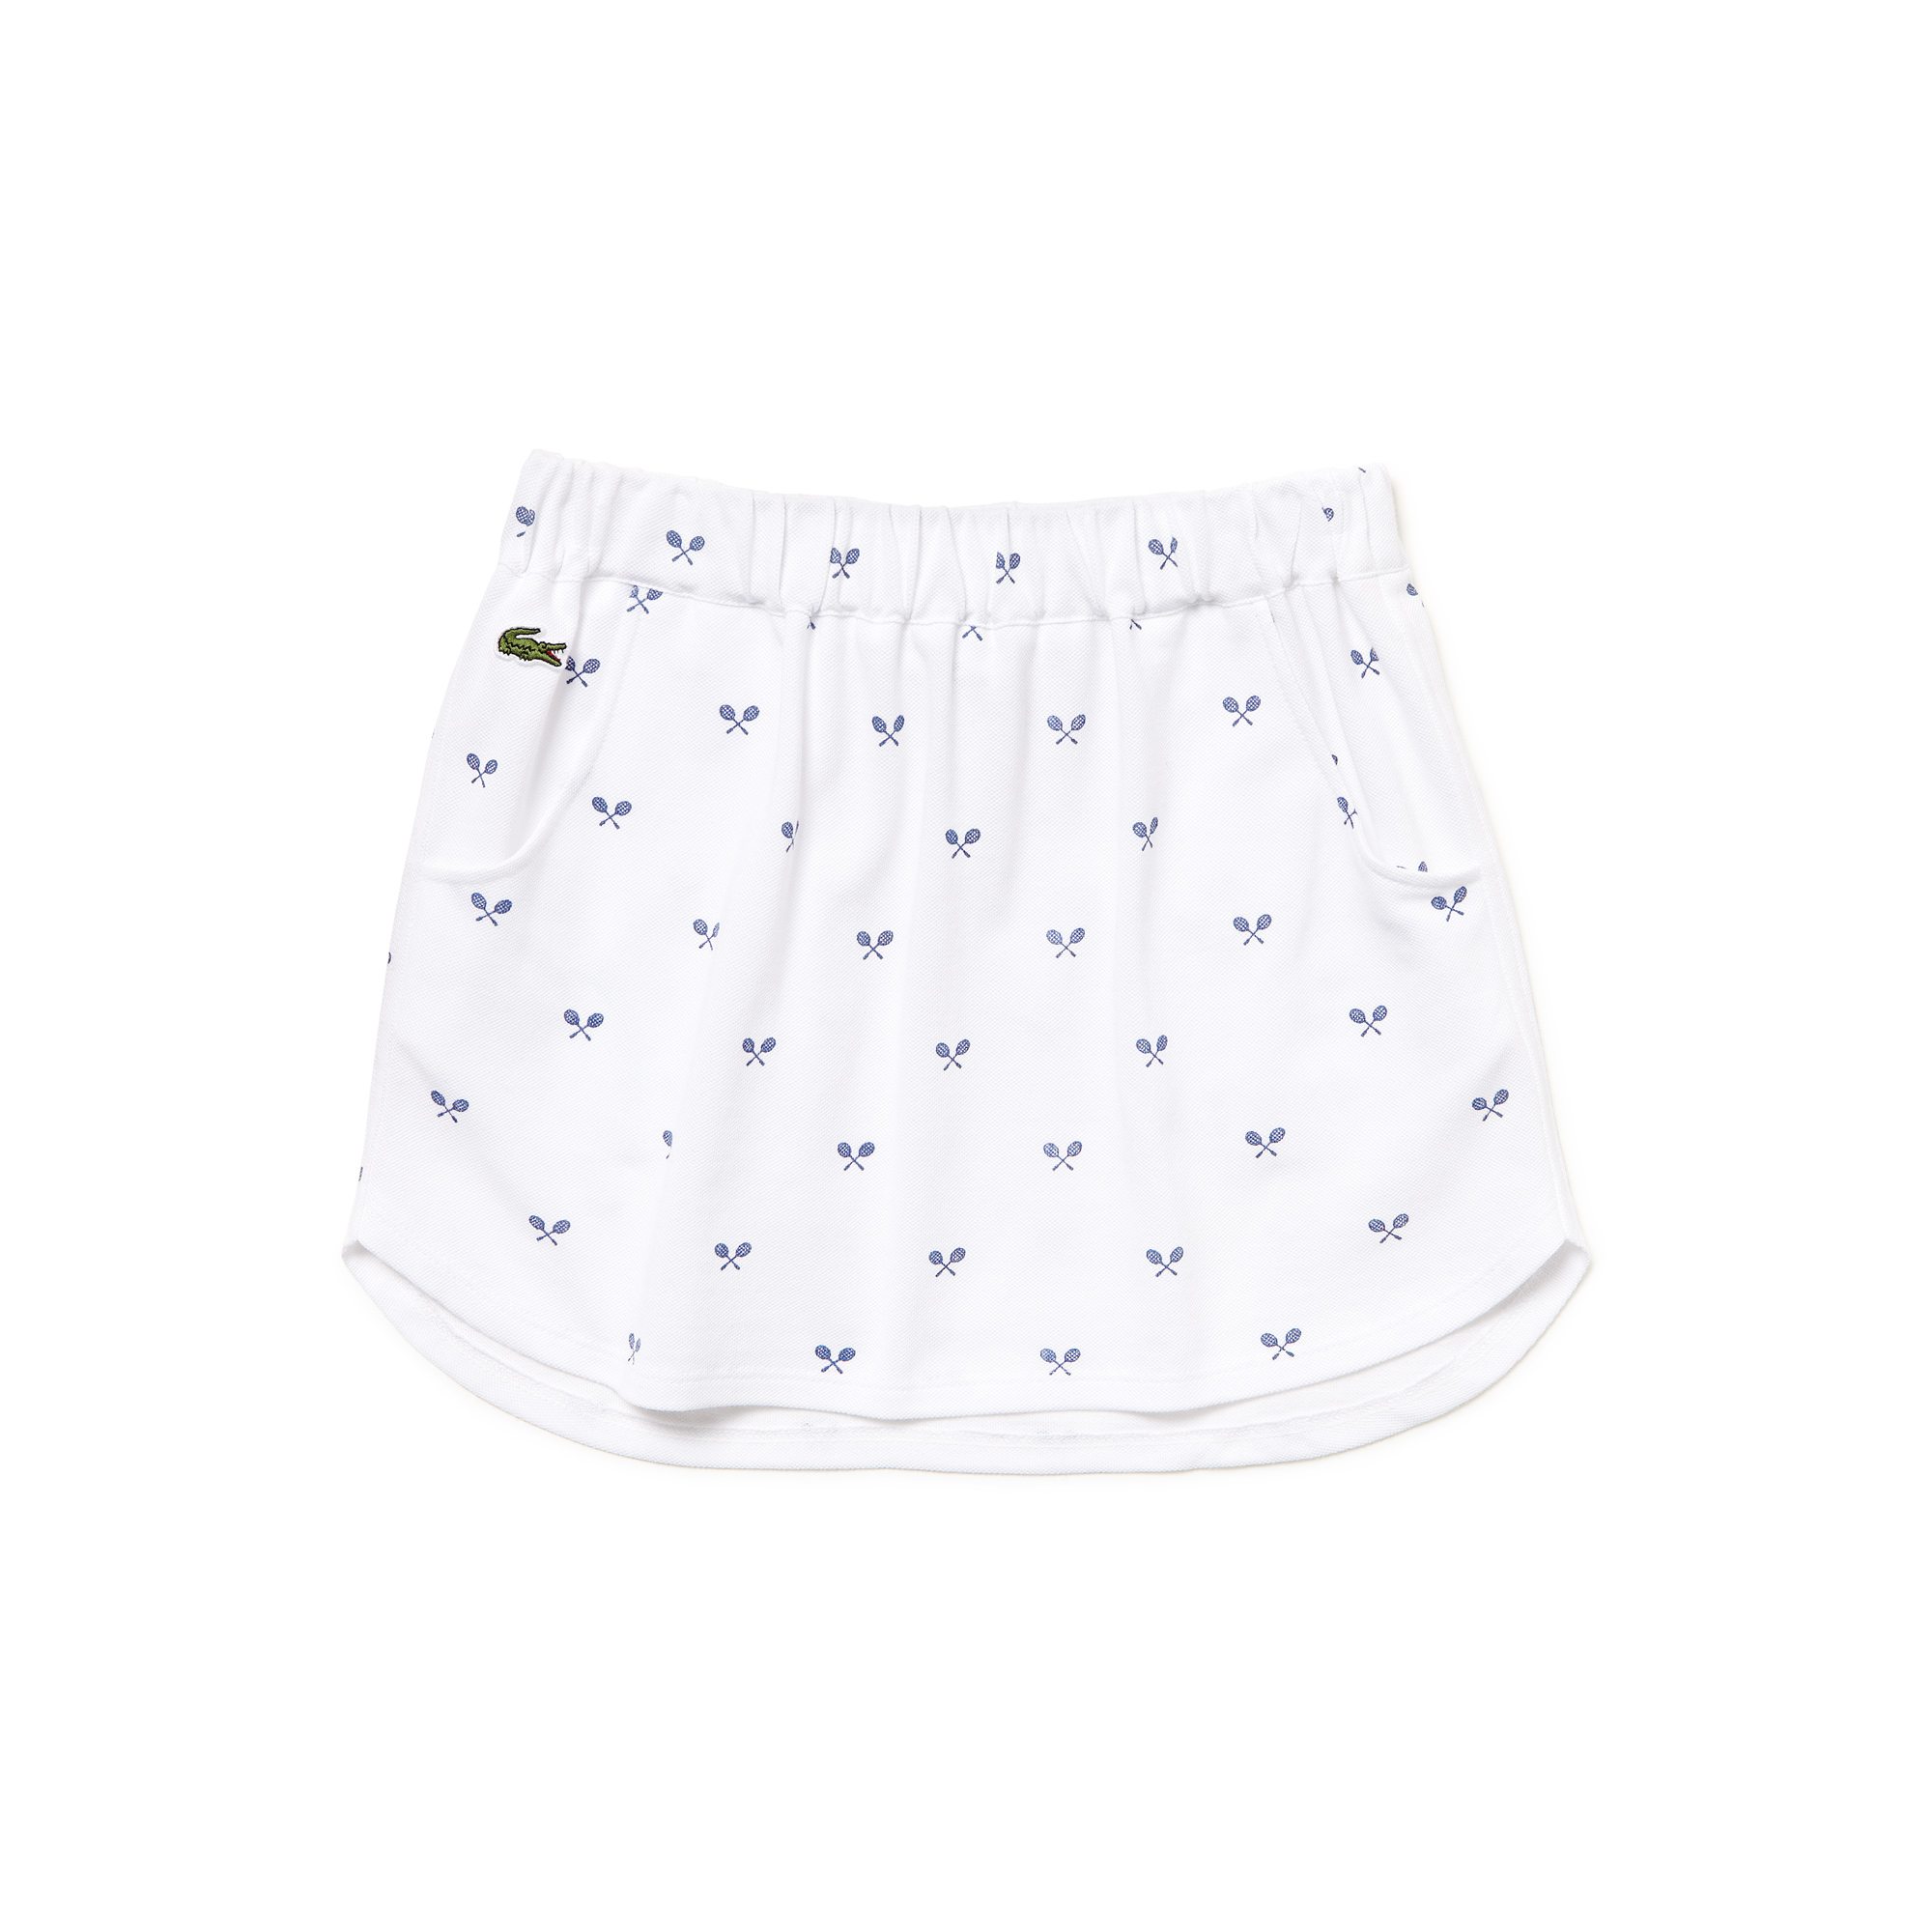 Lacoste Girl's Printed Tennis Racquet Pique Skirt